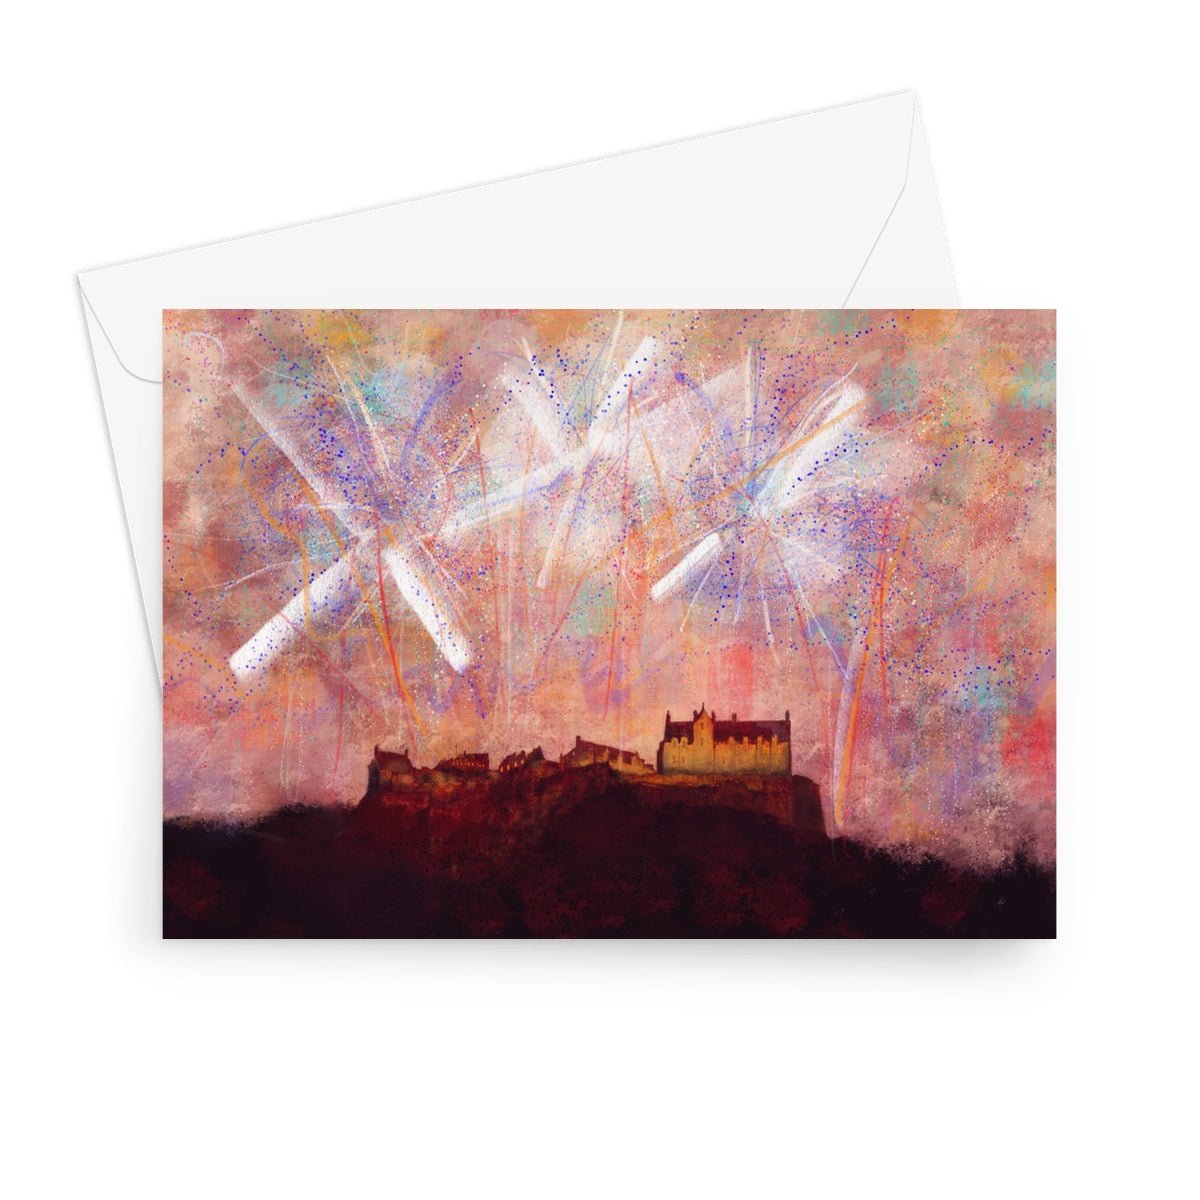 Edinburgh Castle Fireworks Art Gifts Greeting Card-Greetings Cards-Edinburgh & Glasgow Art Gallery-7"x5"-1 Card-Paintings, Prints, Homeware, Art Gifts From Scotland By Scottish Artist Kevin Hunter